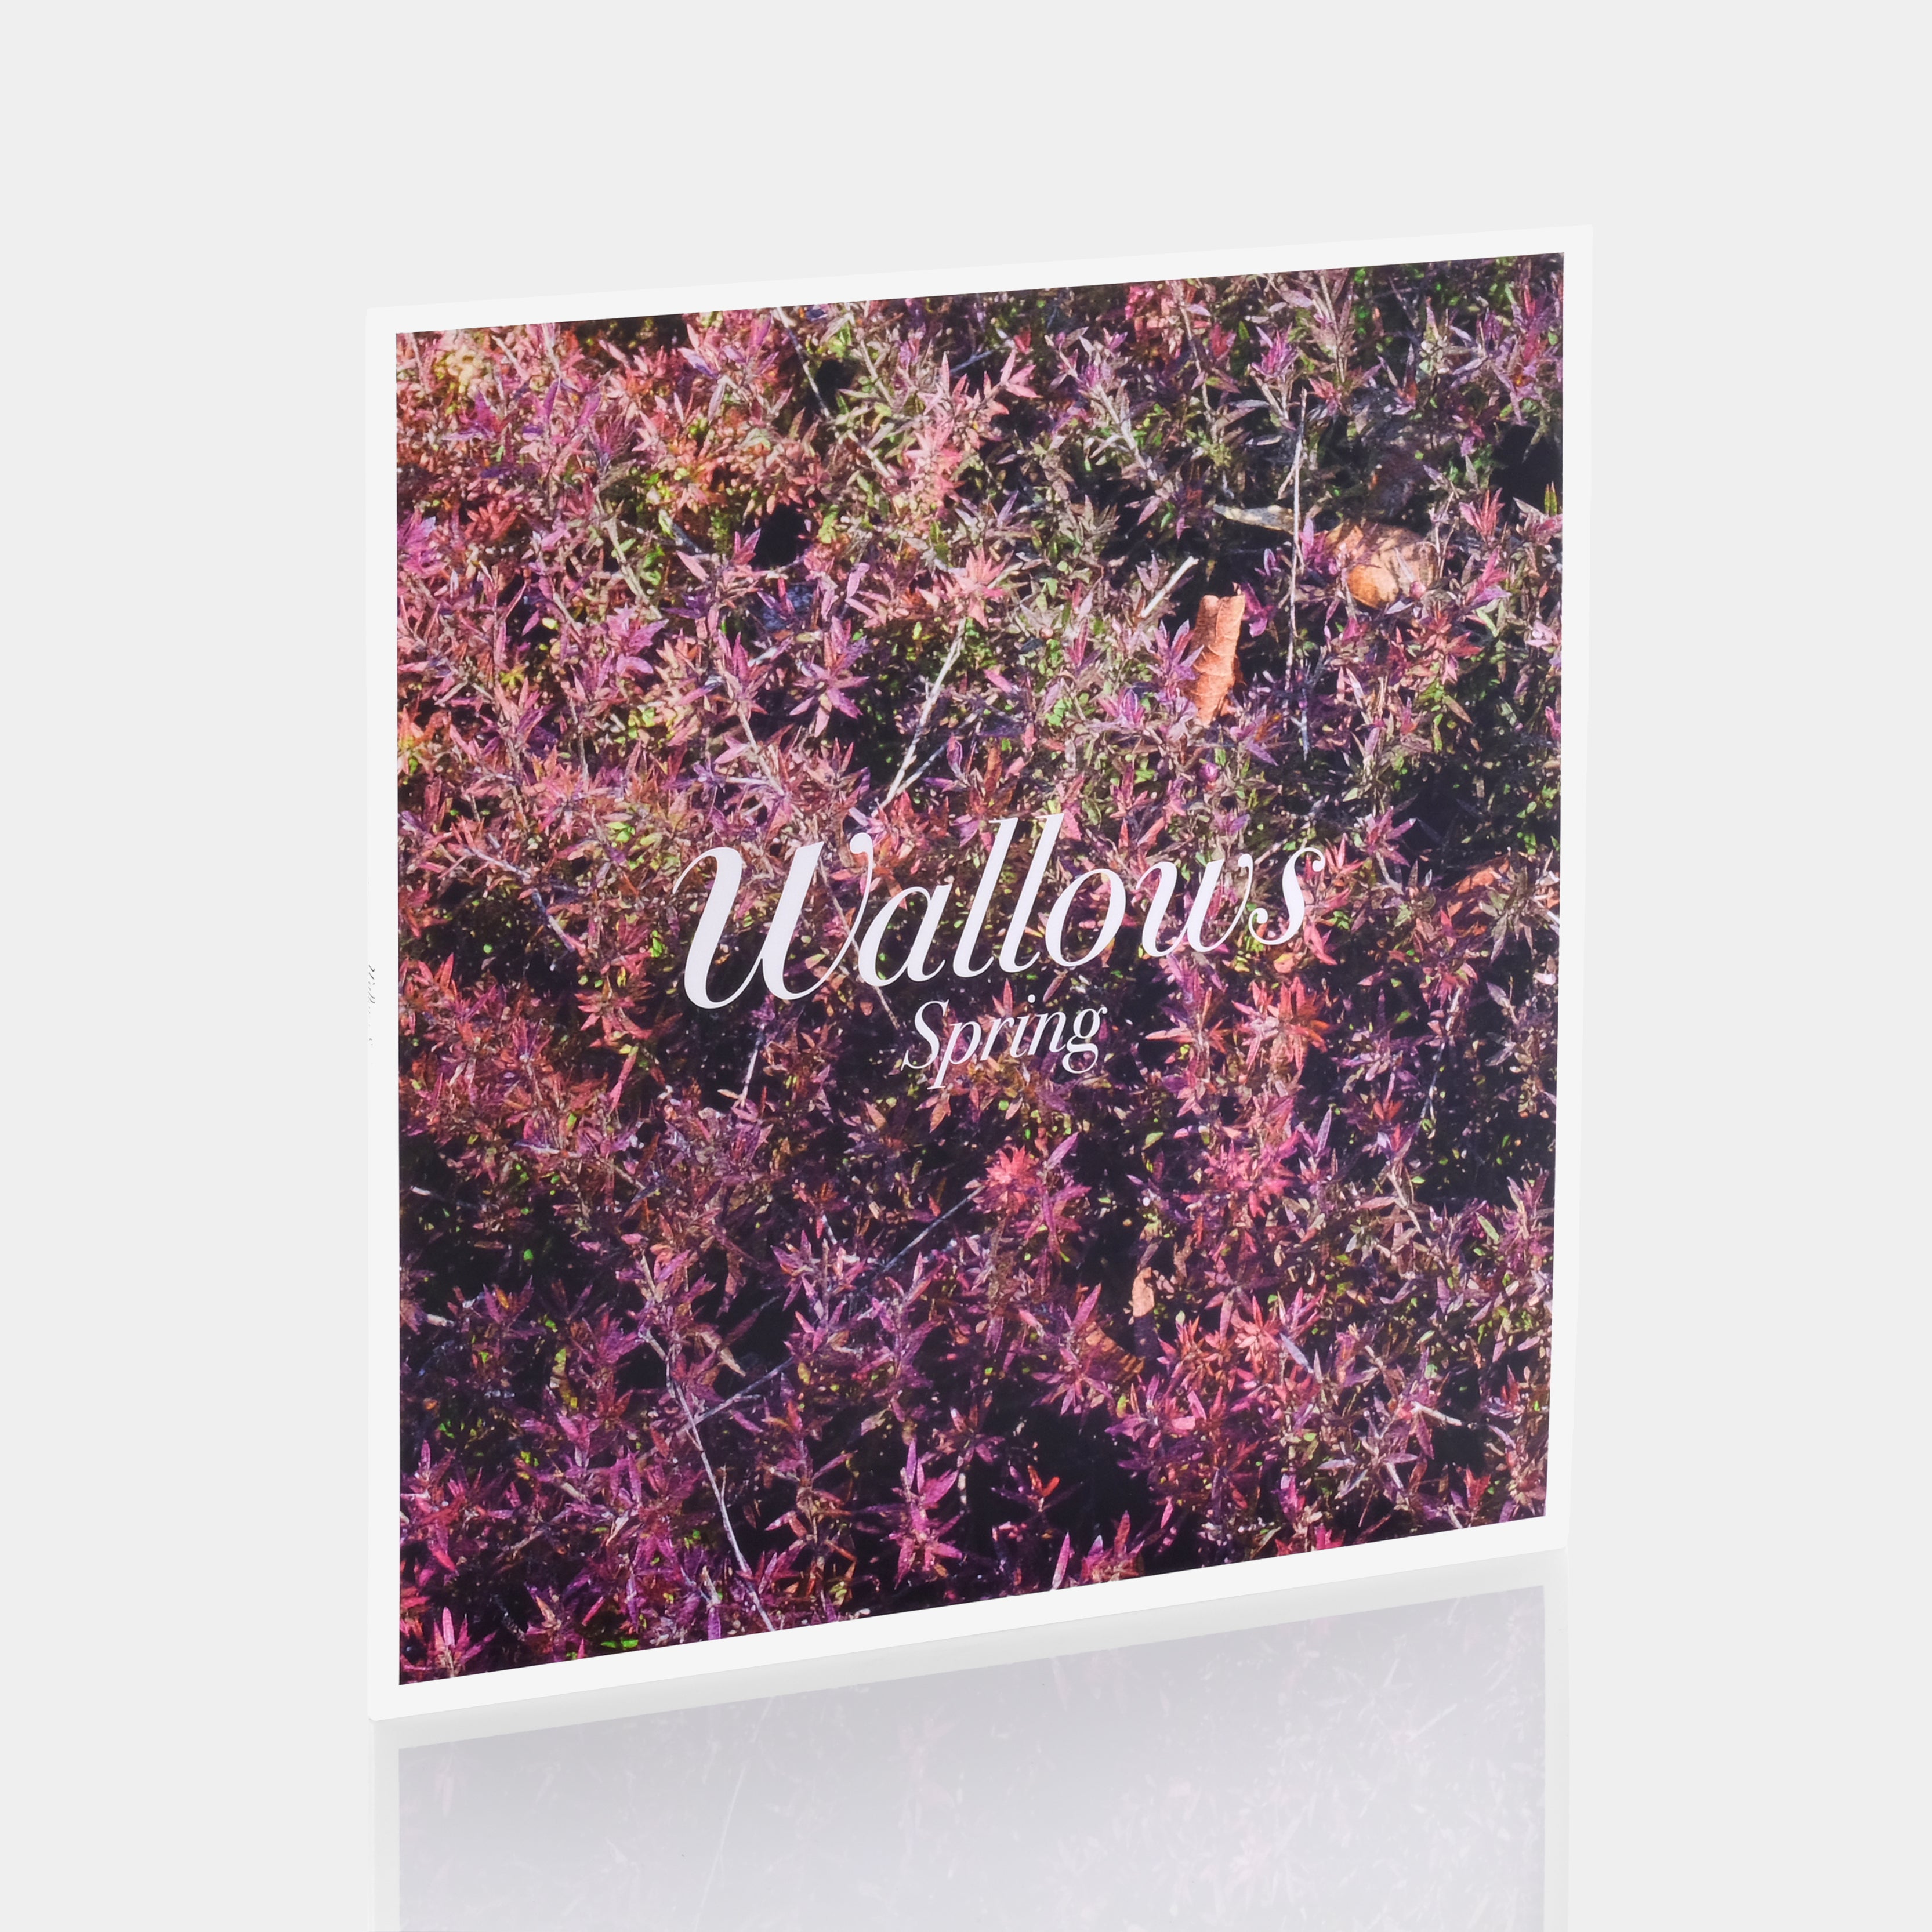 Wallows - Spring EP Green & Pink Vinyl Record